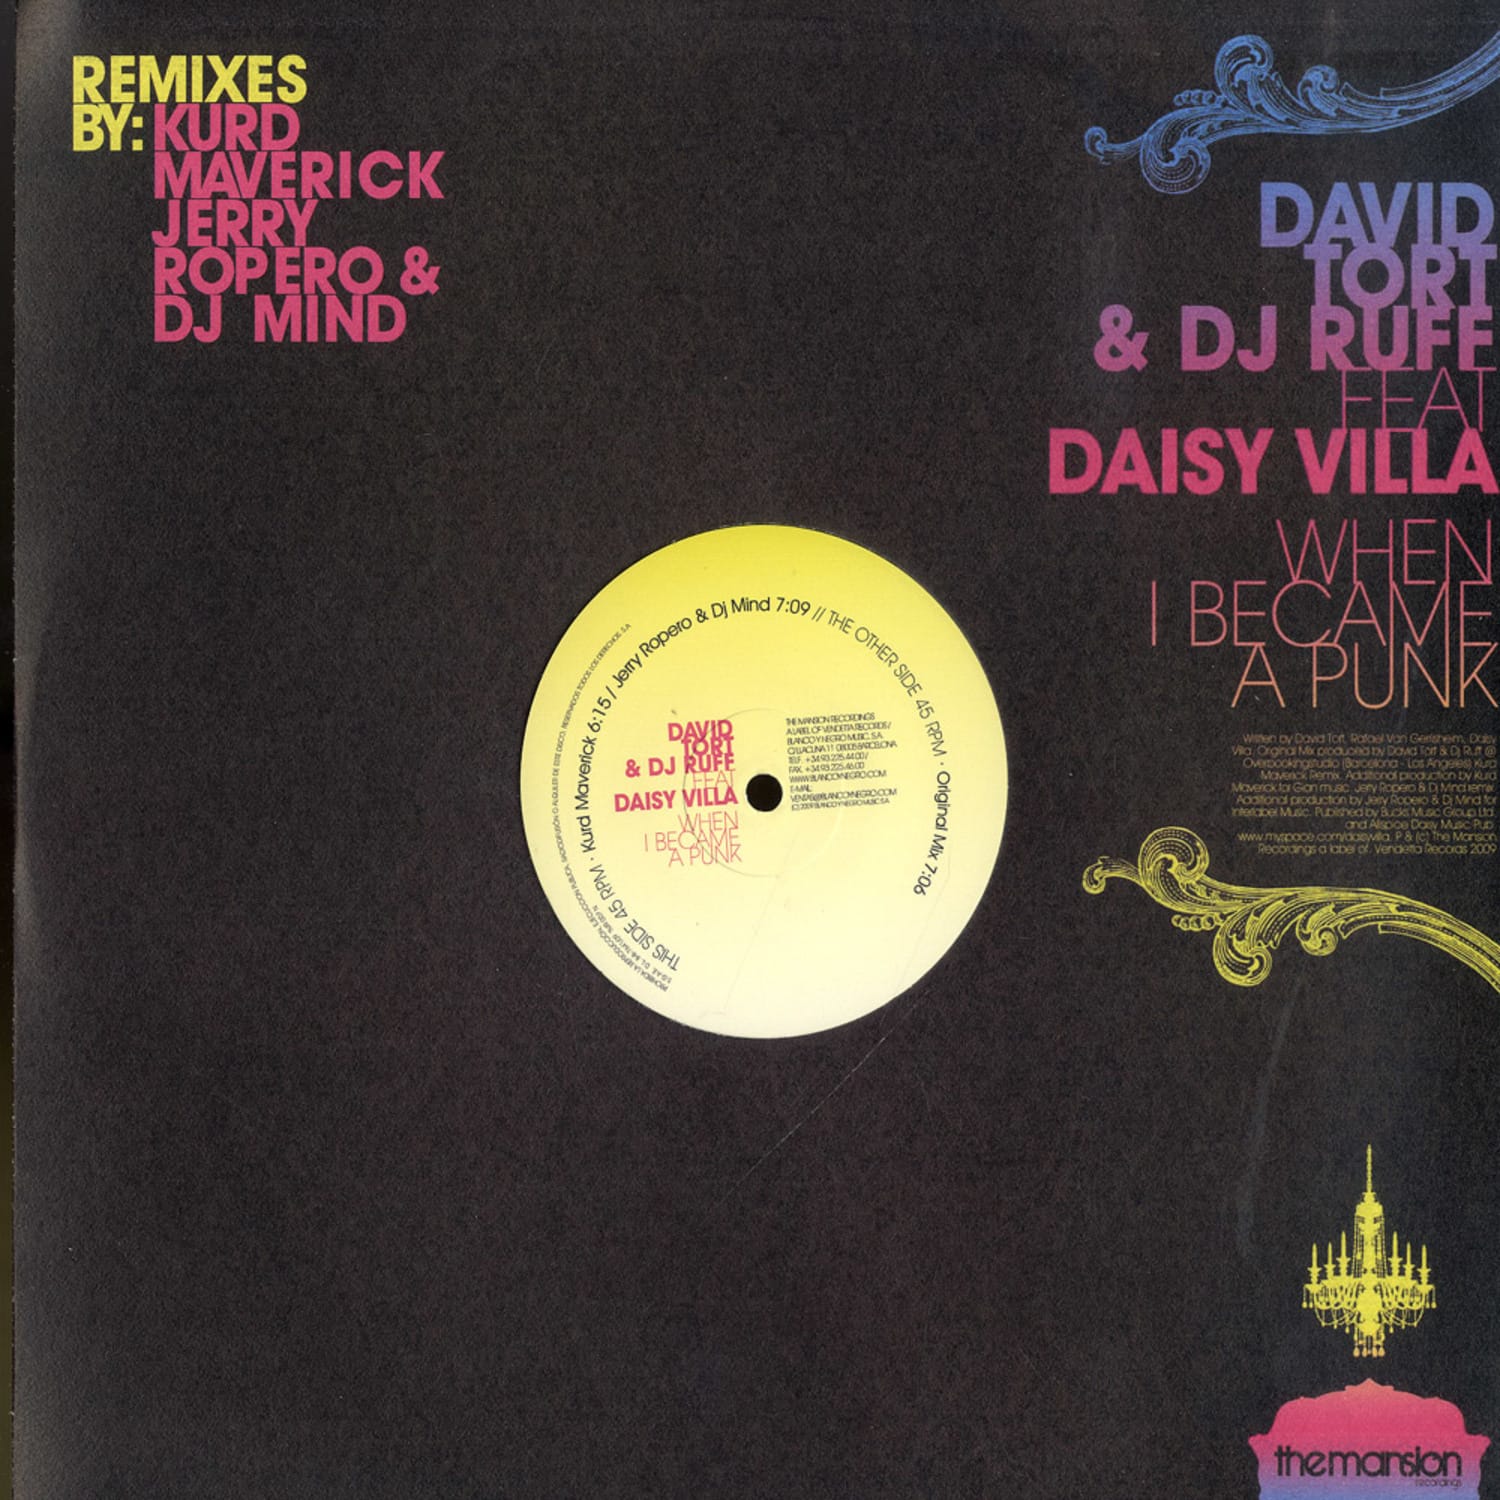 David Tort & DJ Ruff feat Daisy Villa - WHEN I BECAME A PUNK